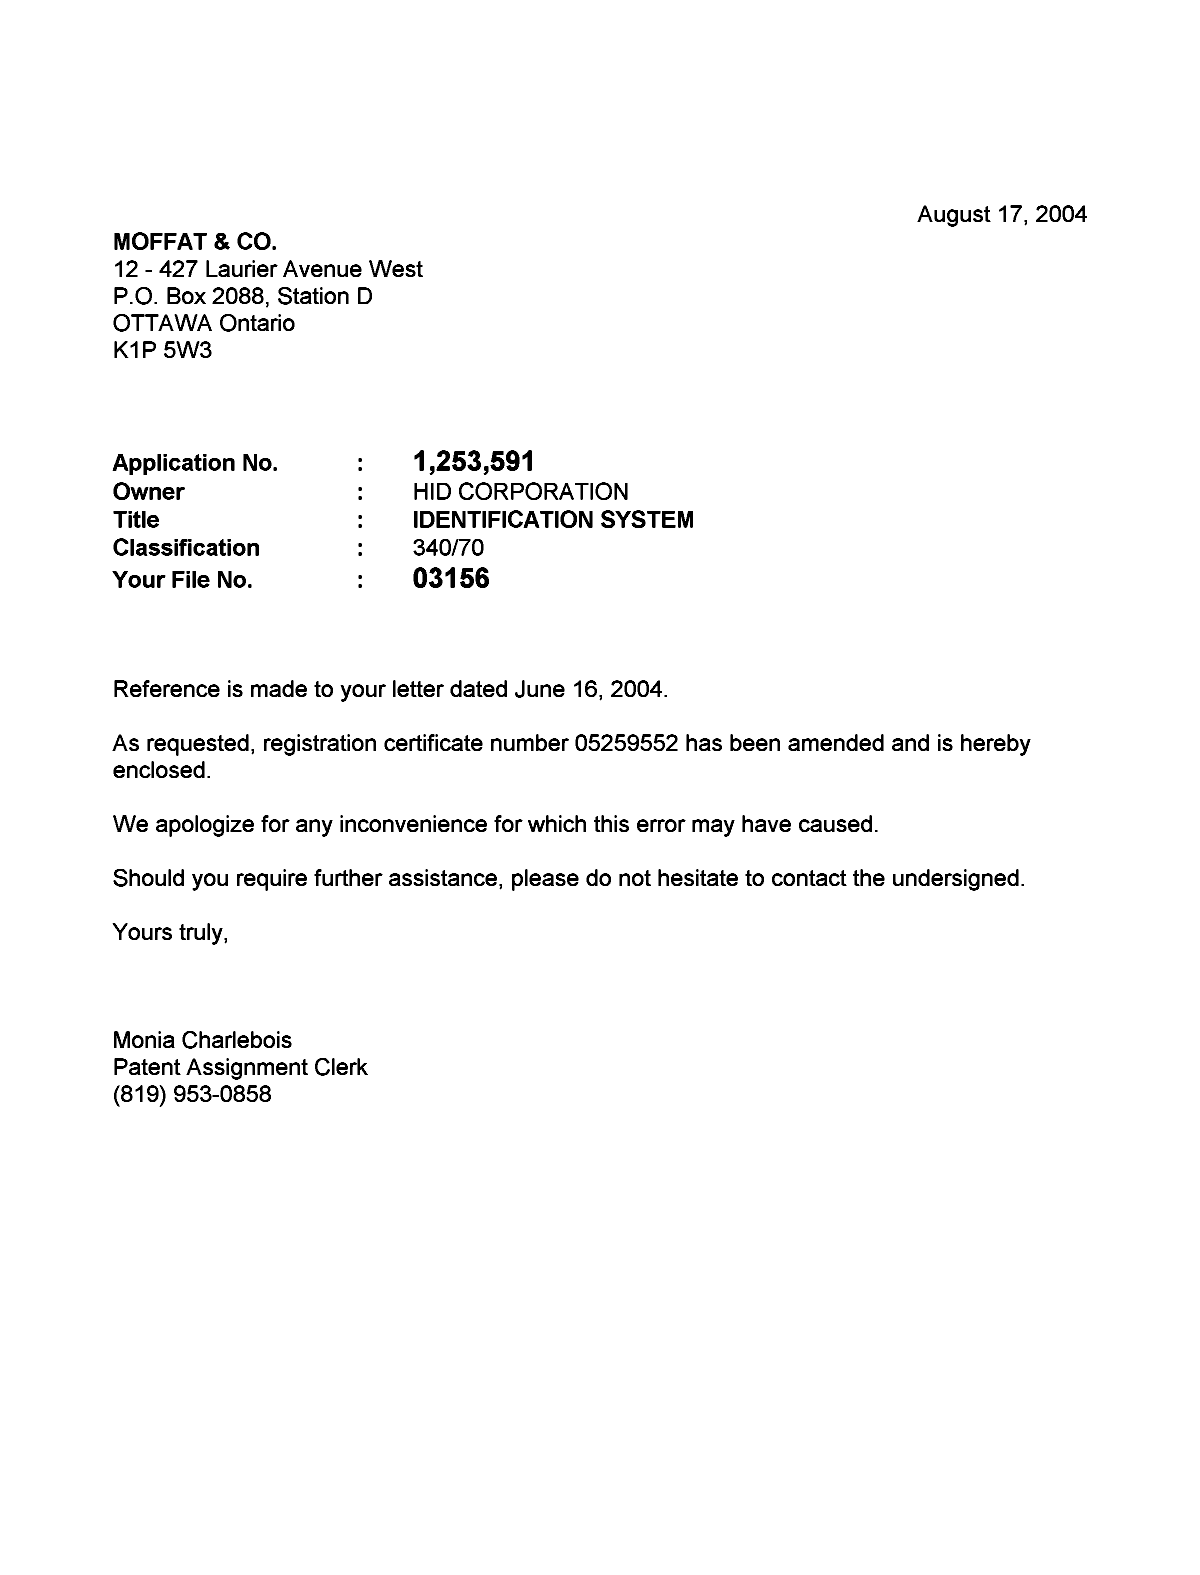 Canadian Patent Document 1253591. Correspondence 20040817. Image 1 of 1